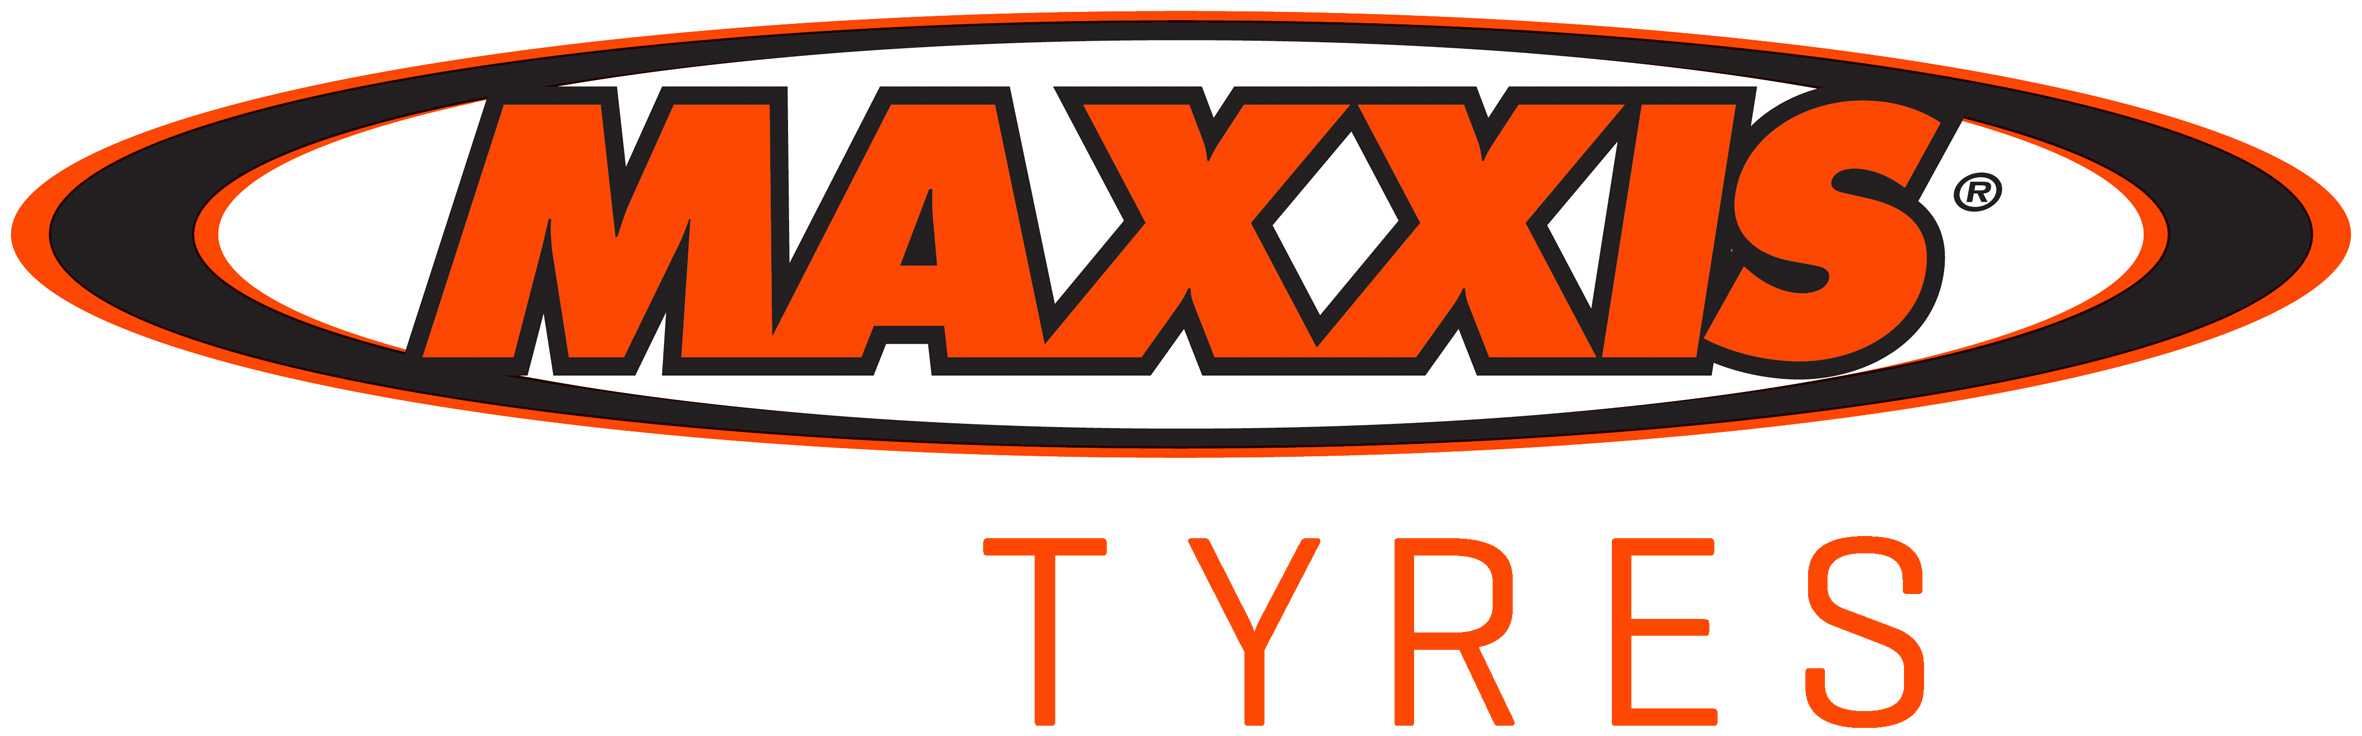 Maxxis Tyres Uk